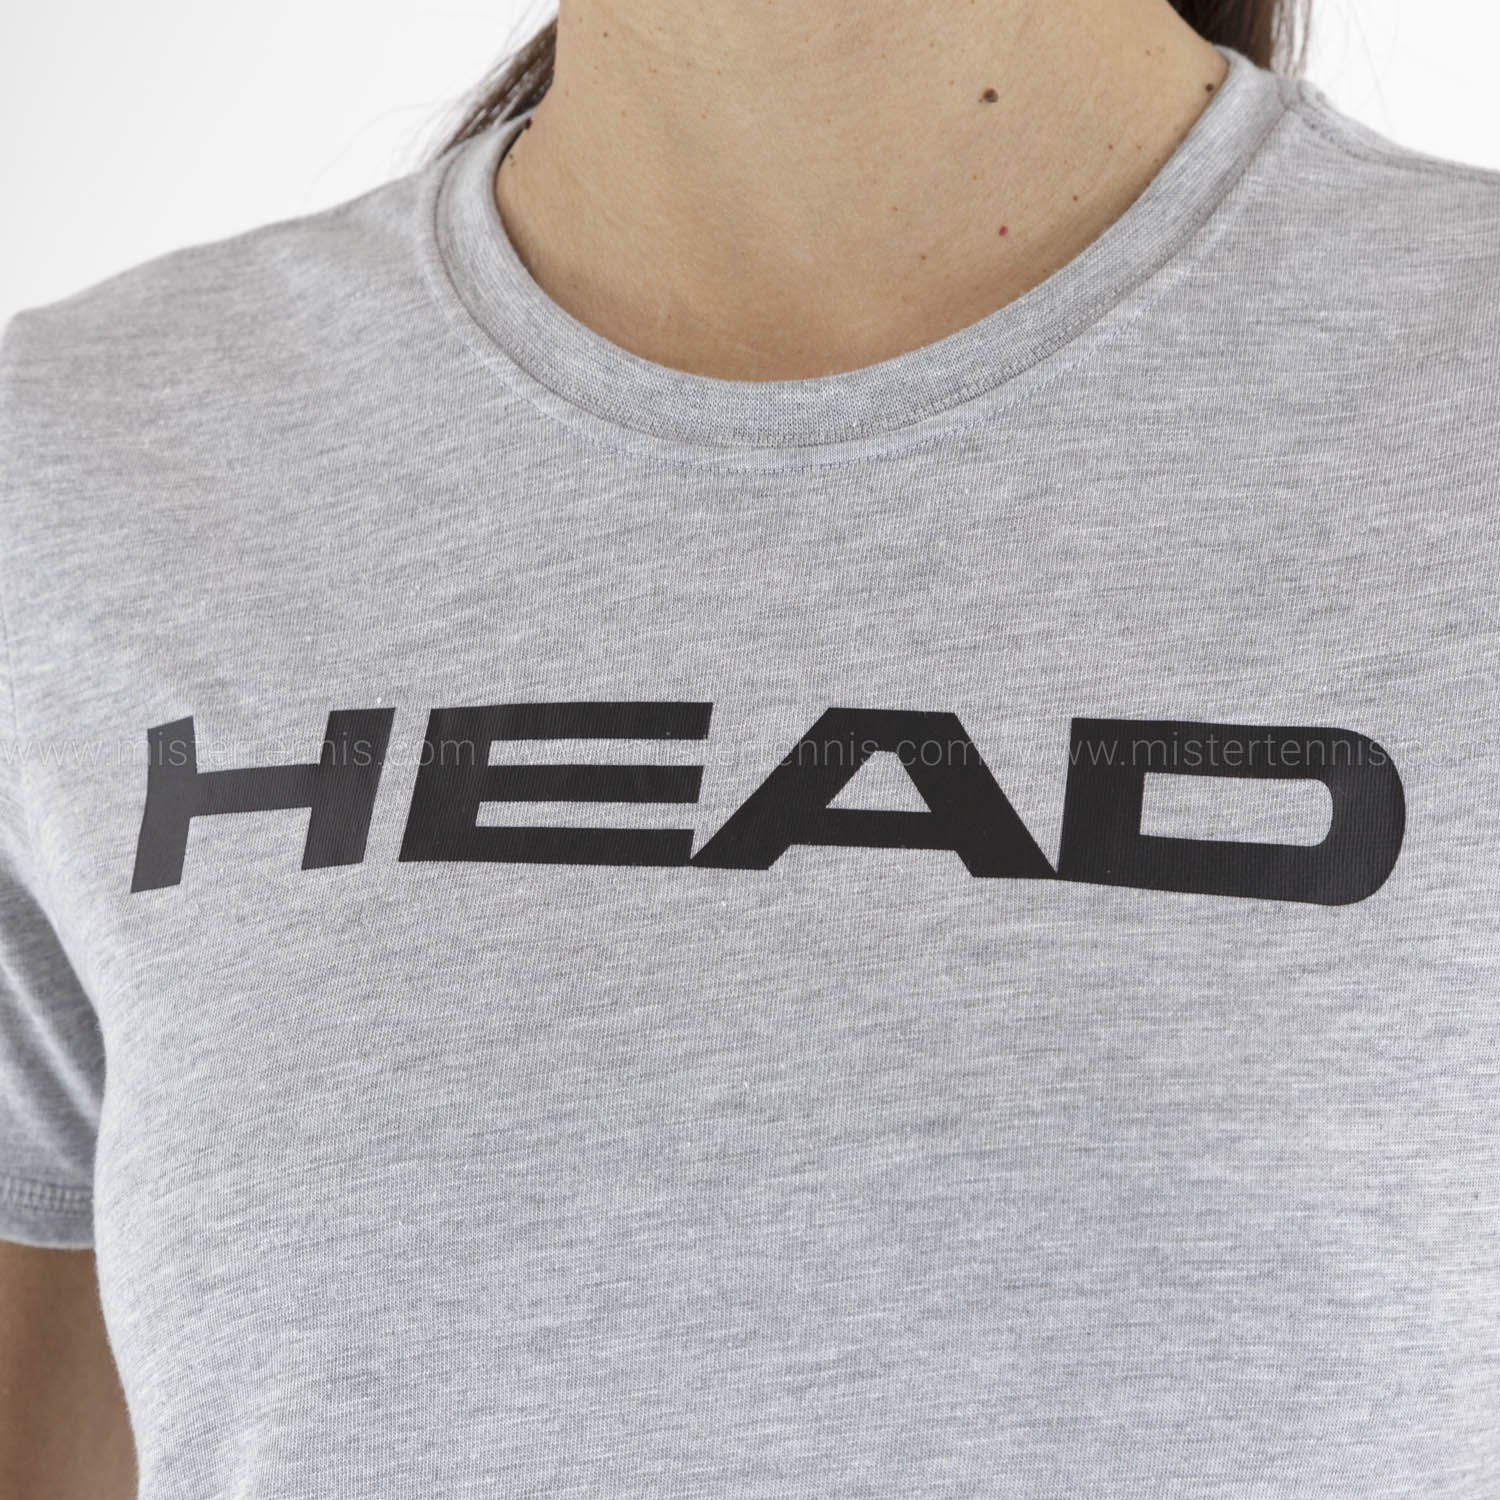 Head Club Lucy Camiseta - Grey Melange